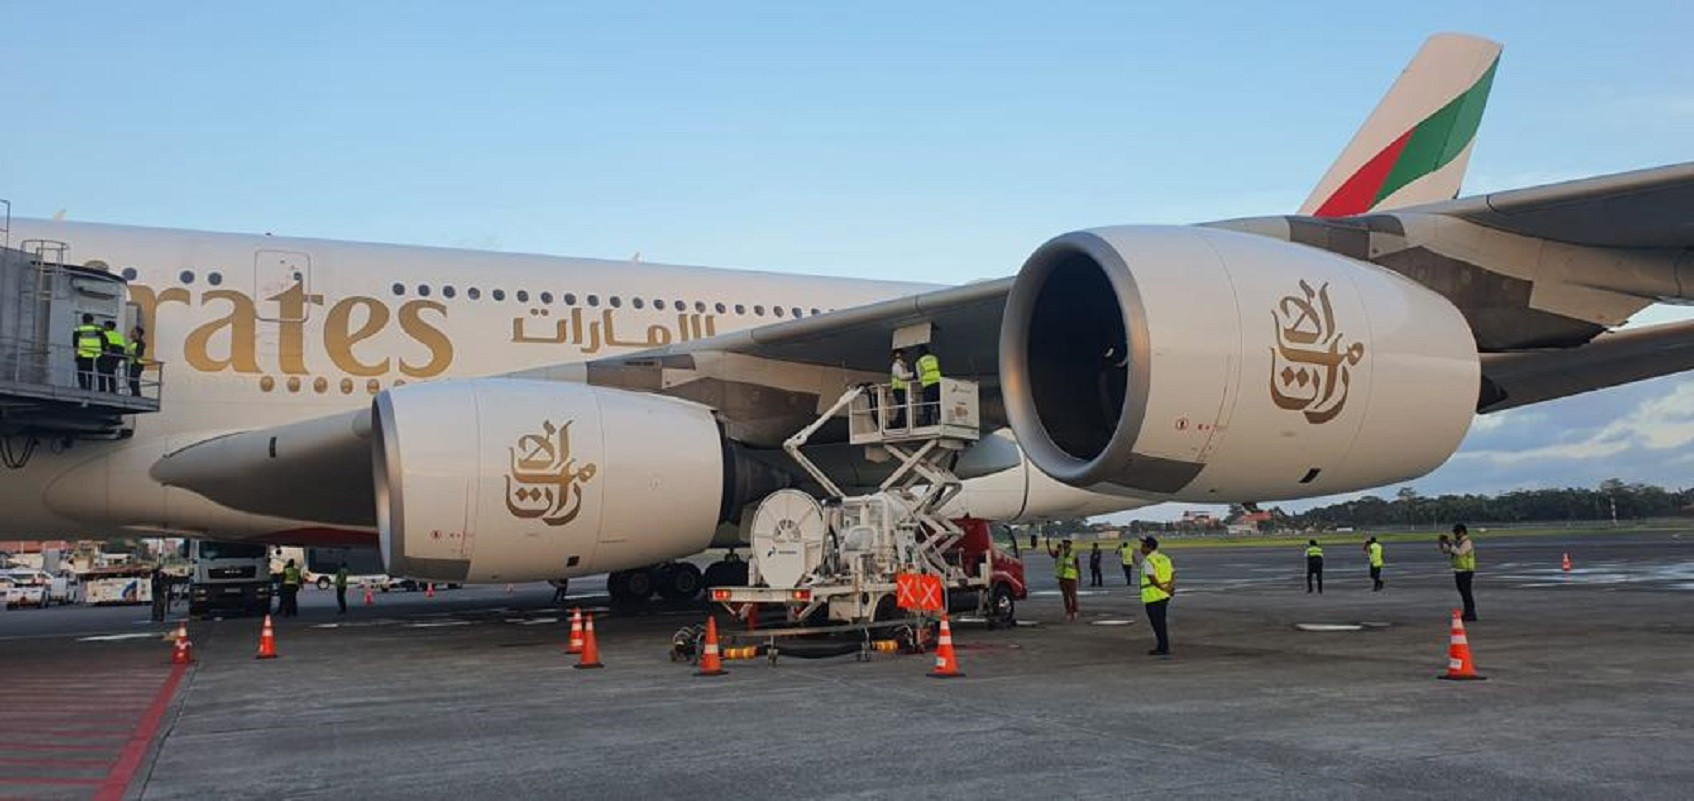 Emirates Tertarik Menambah Jumlah Penerbangan ke Bali, Surabaya & Jakarta Menyusul - JPNN.com Bali